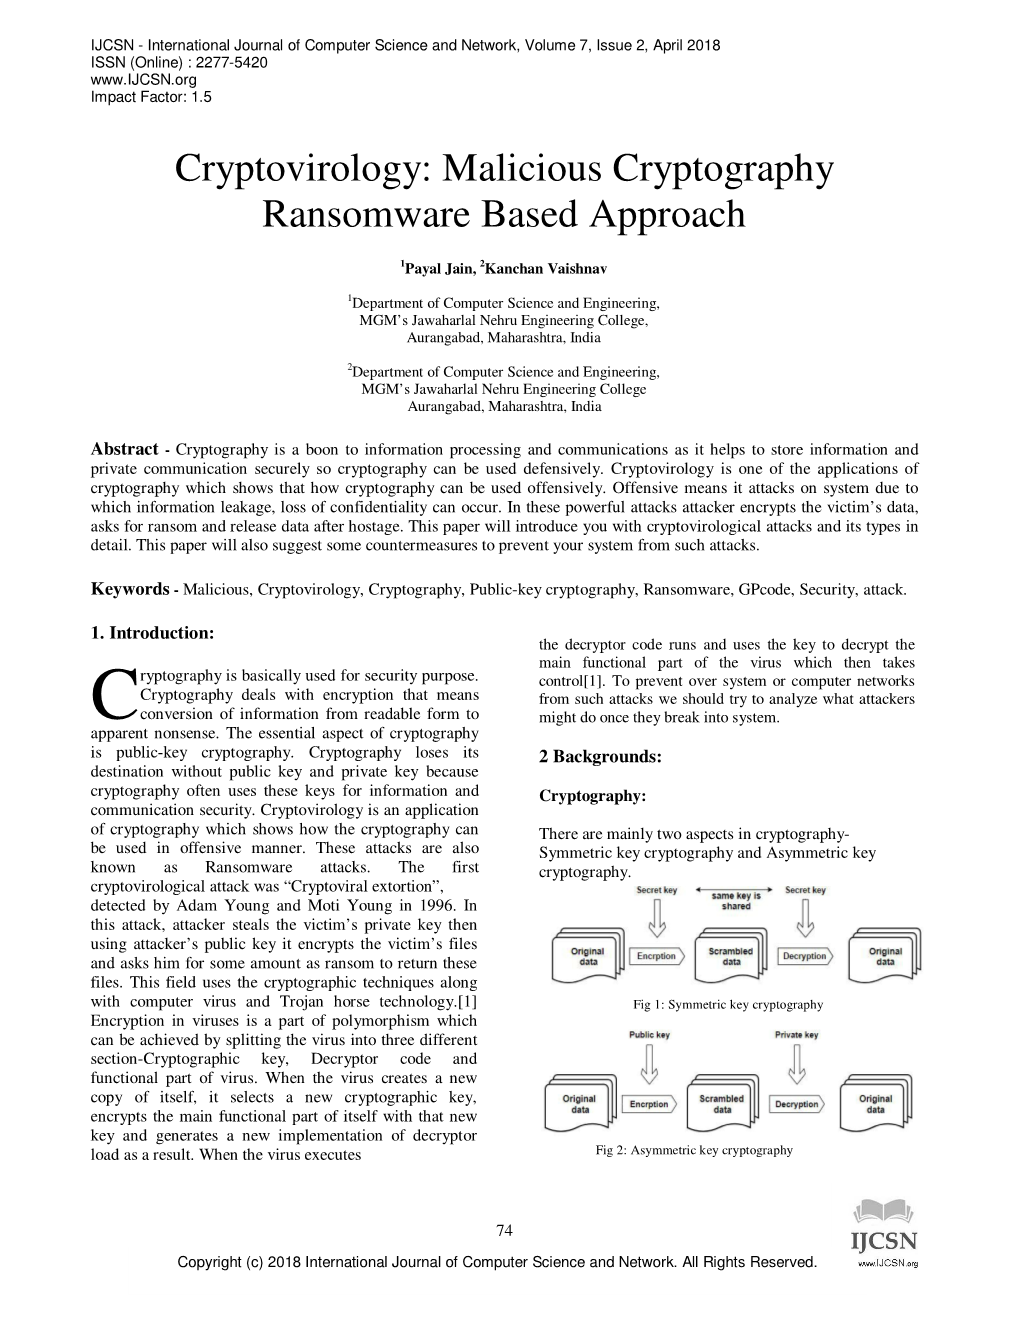 Cryptovirology: Malicious Cryptography Ransomware Based Approach